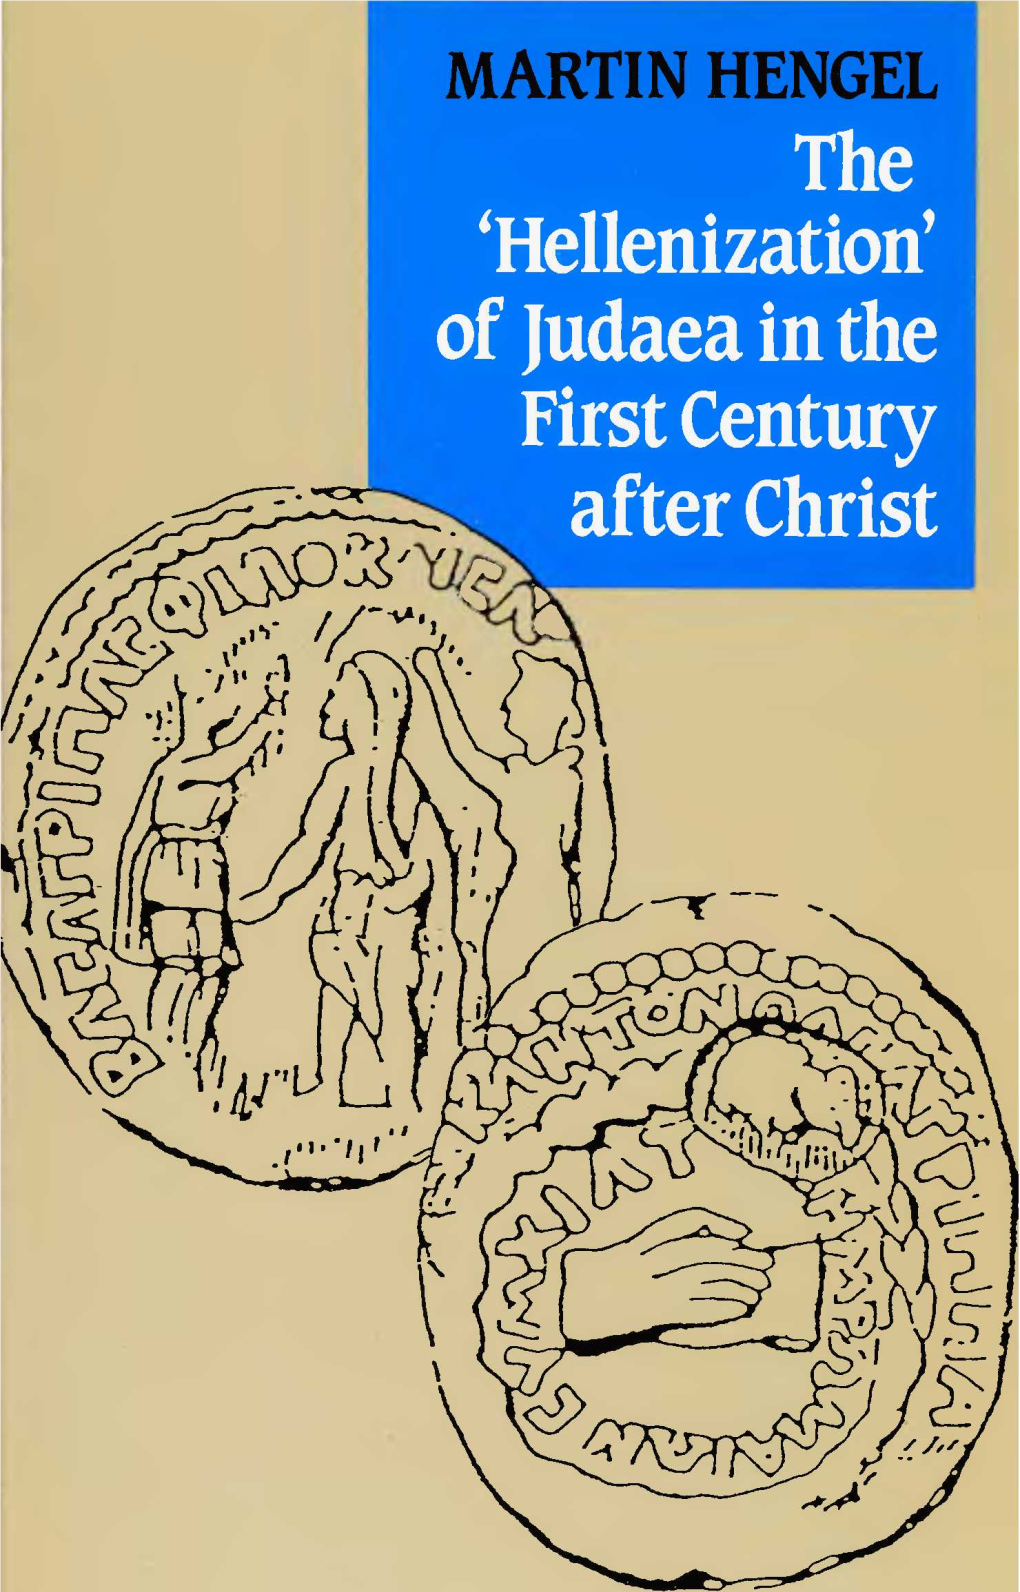 The 'Hellenization' of Judaea in the First Century After Christ MARTIN HENGEL the 'Hellenization' of Judaea in the First Century After Christ